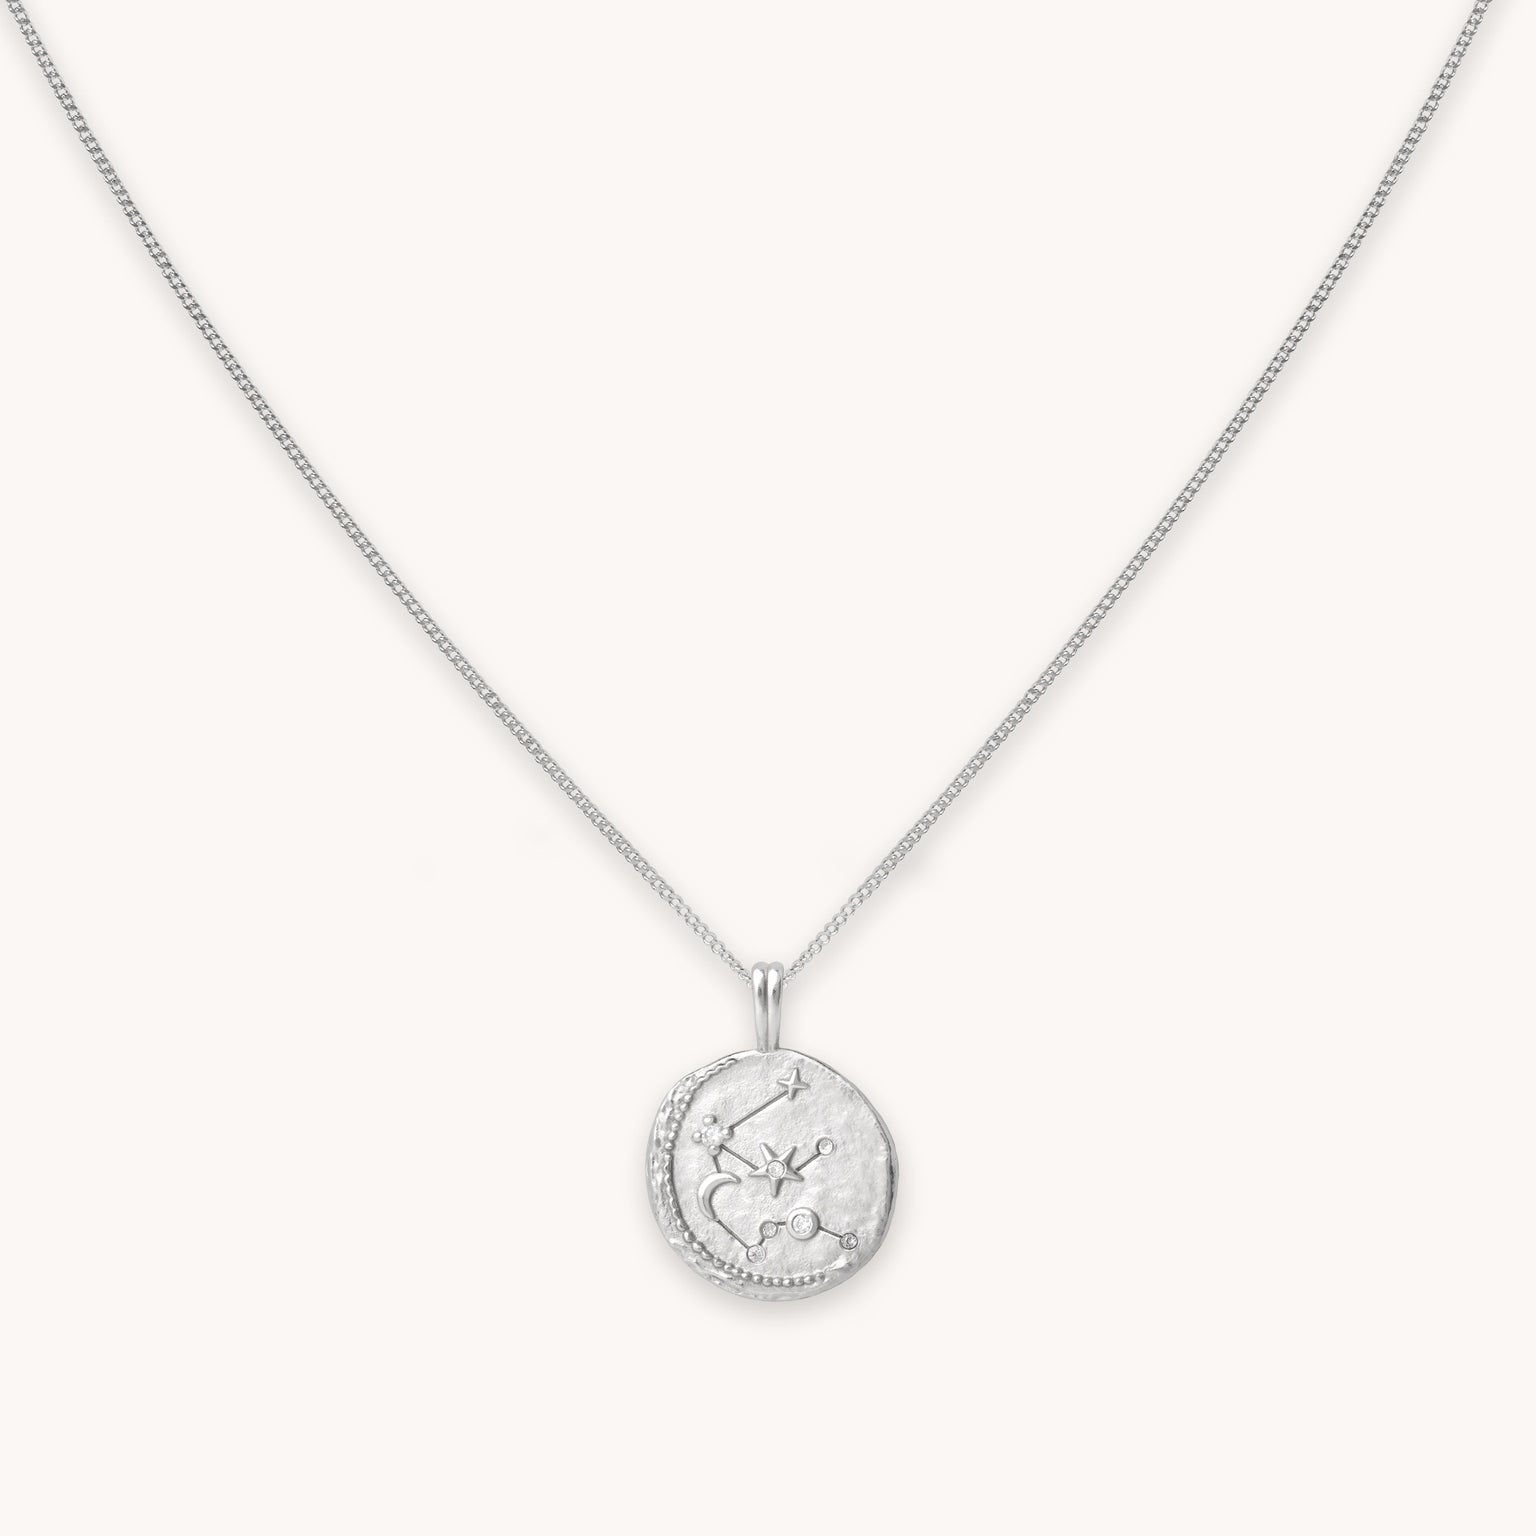 Aquarius Zodiac Pendant Necklace in Silver